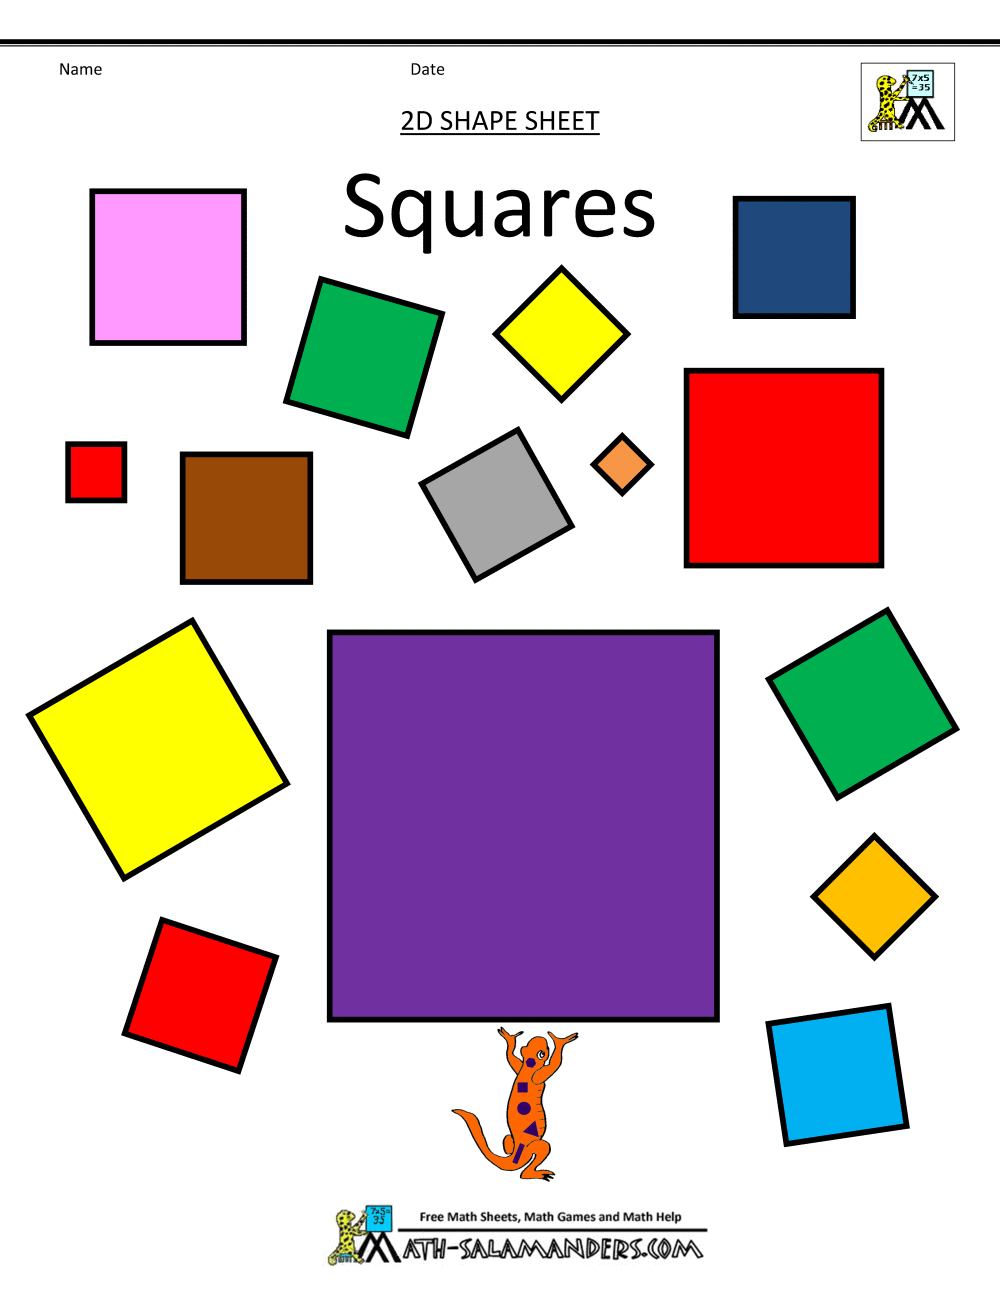 square clipart different